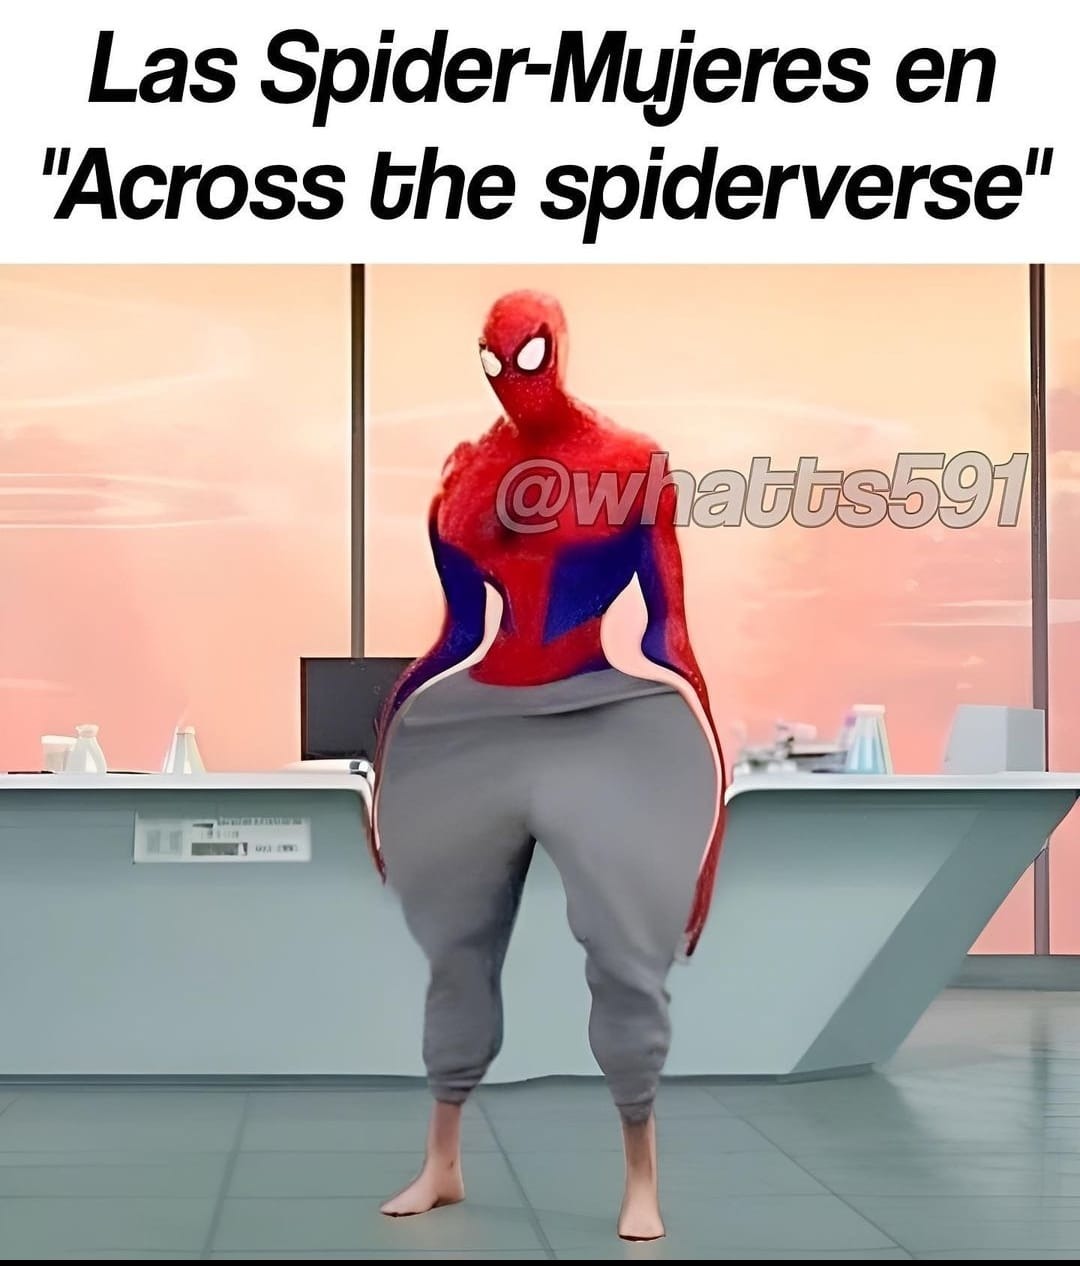 Mujeres de Spiderman across the spiderverse - meme